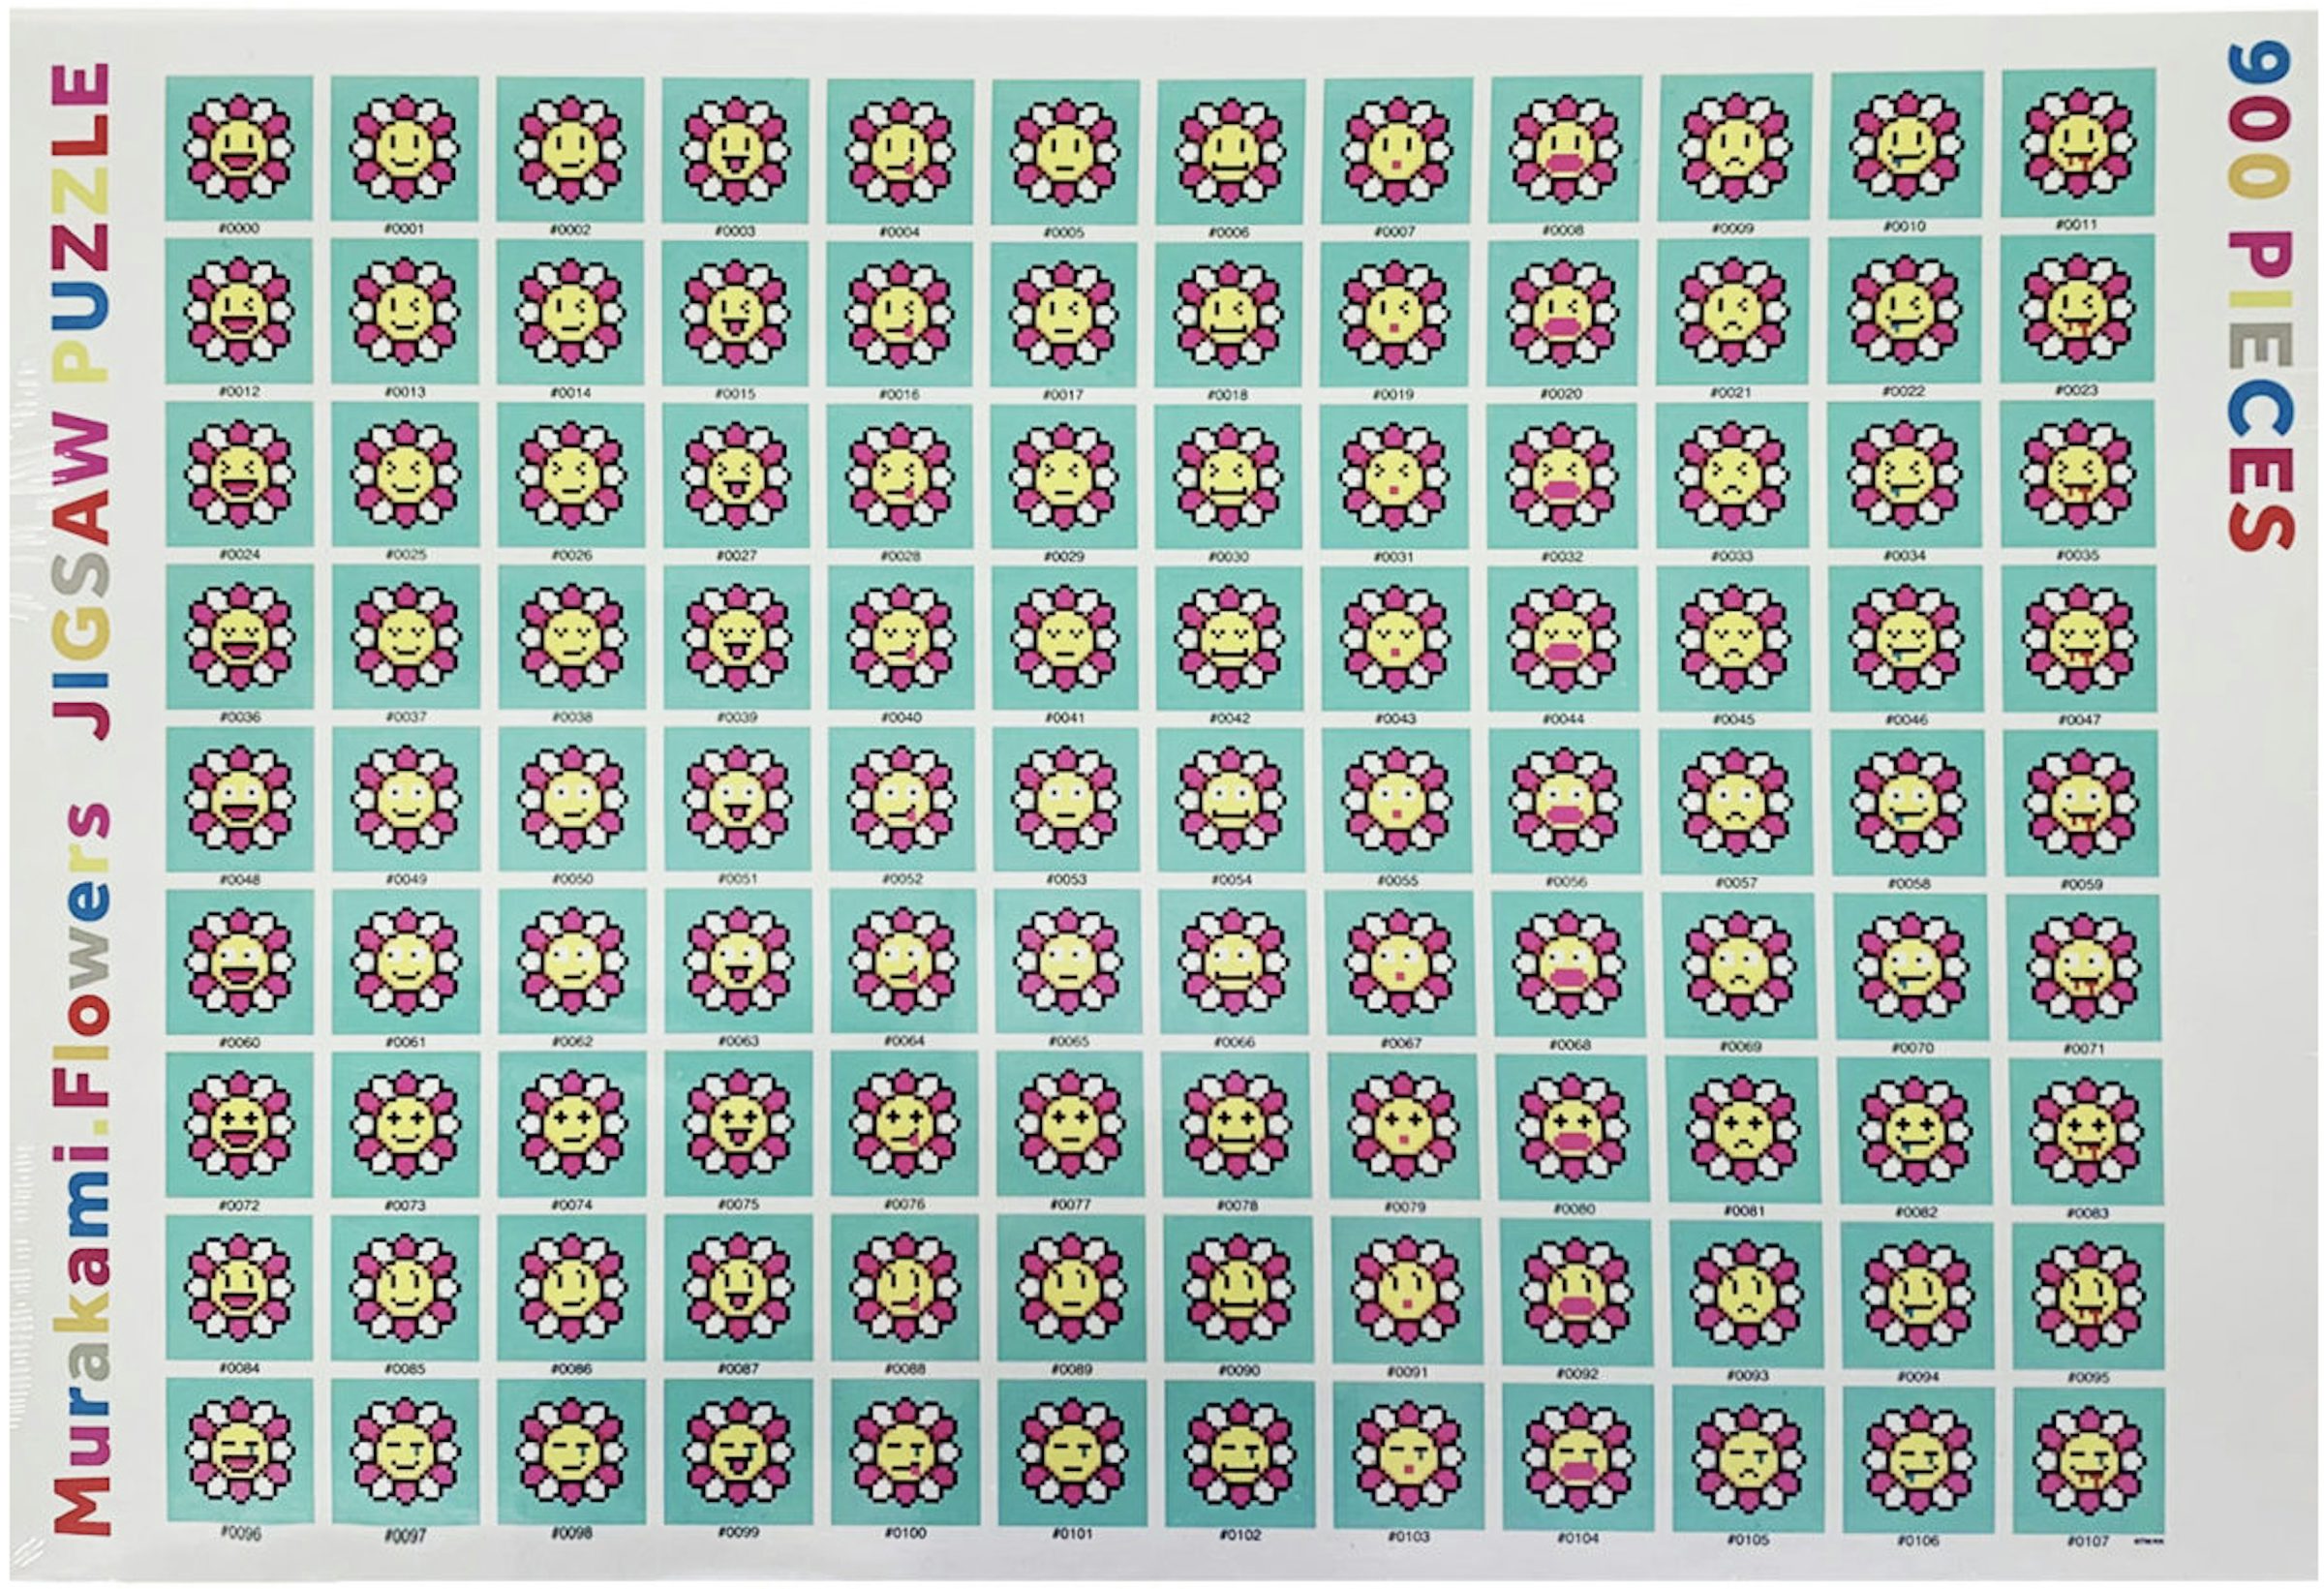 Takashi Murakami Kaikai Kiki Cherry Blossom Jigsaw Puzzle (1,050 Pieces)